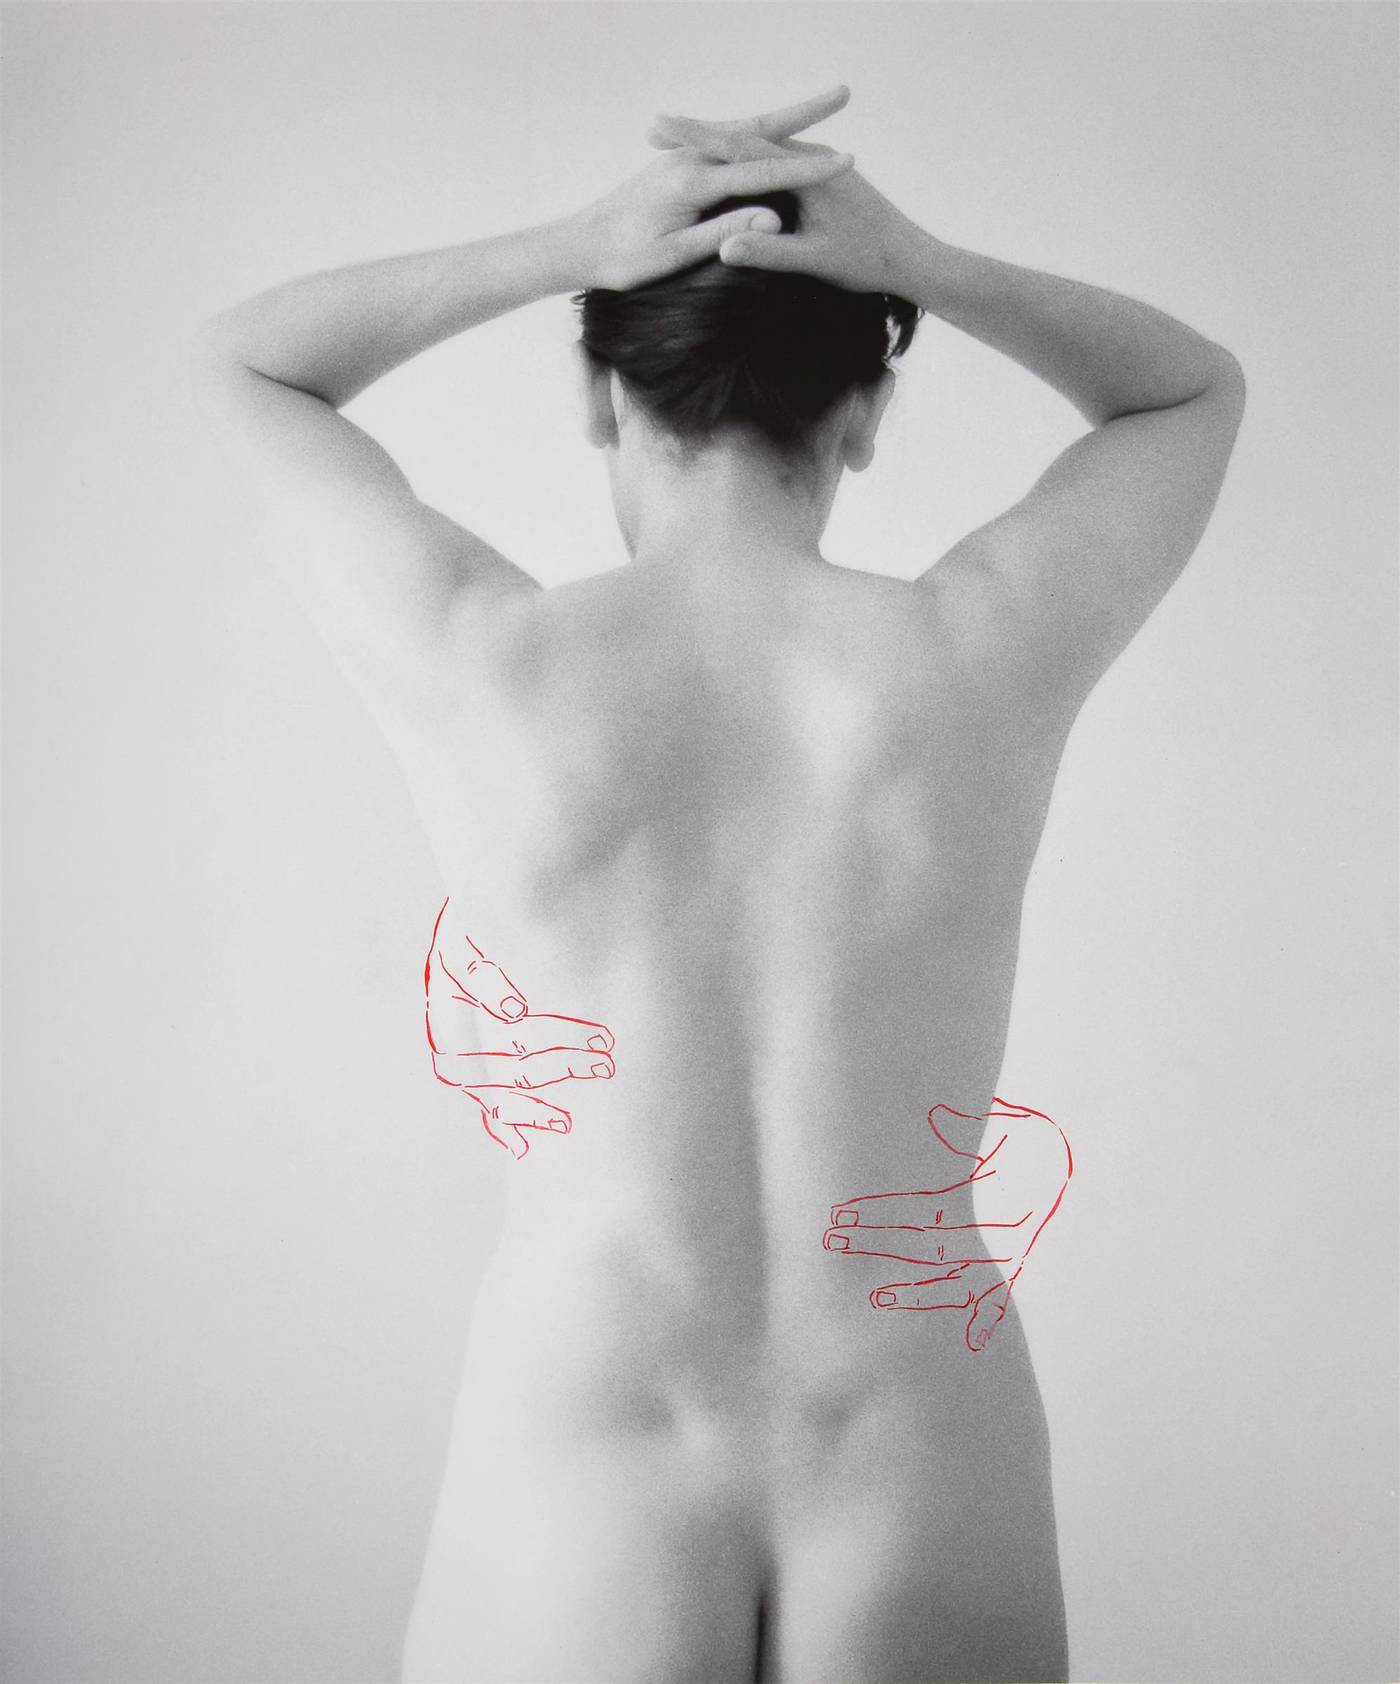 Ulrike Lienbacher  (*1963), "o.T.", 2020, Pigmentdruck auf Baryt, Inv.-Nr. Foto 44318